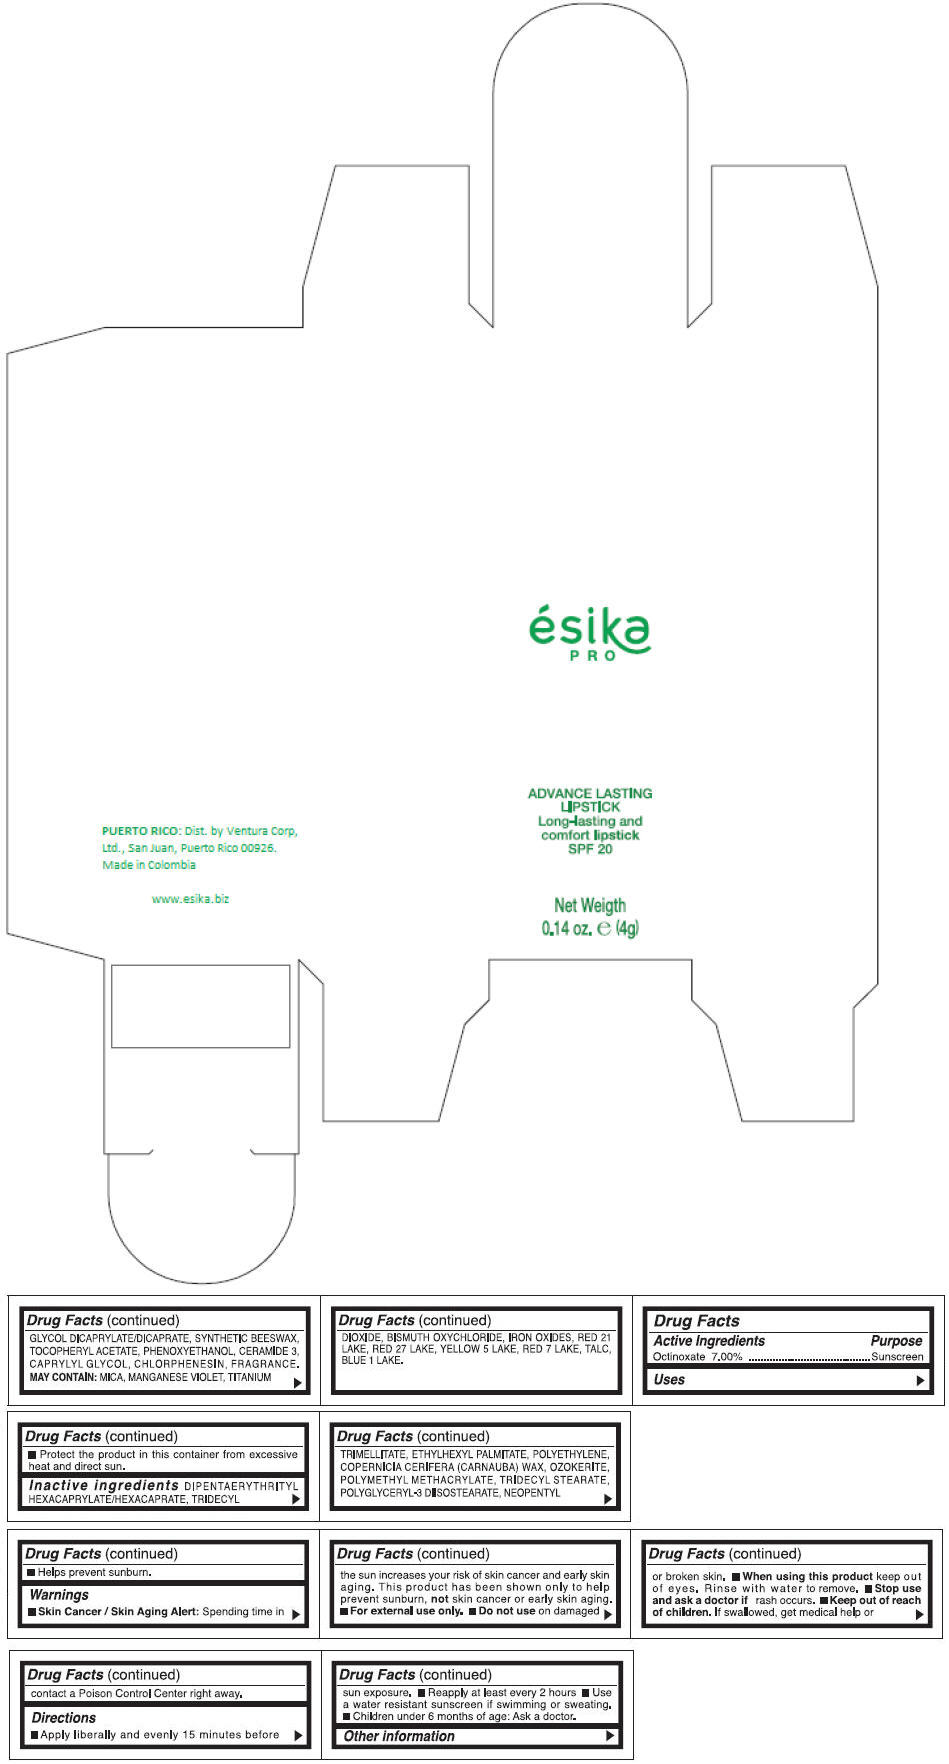 PRINCIPAL DISPLAY PANEL - 4 g Tube Box - (ROJO FIESTA) - RED